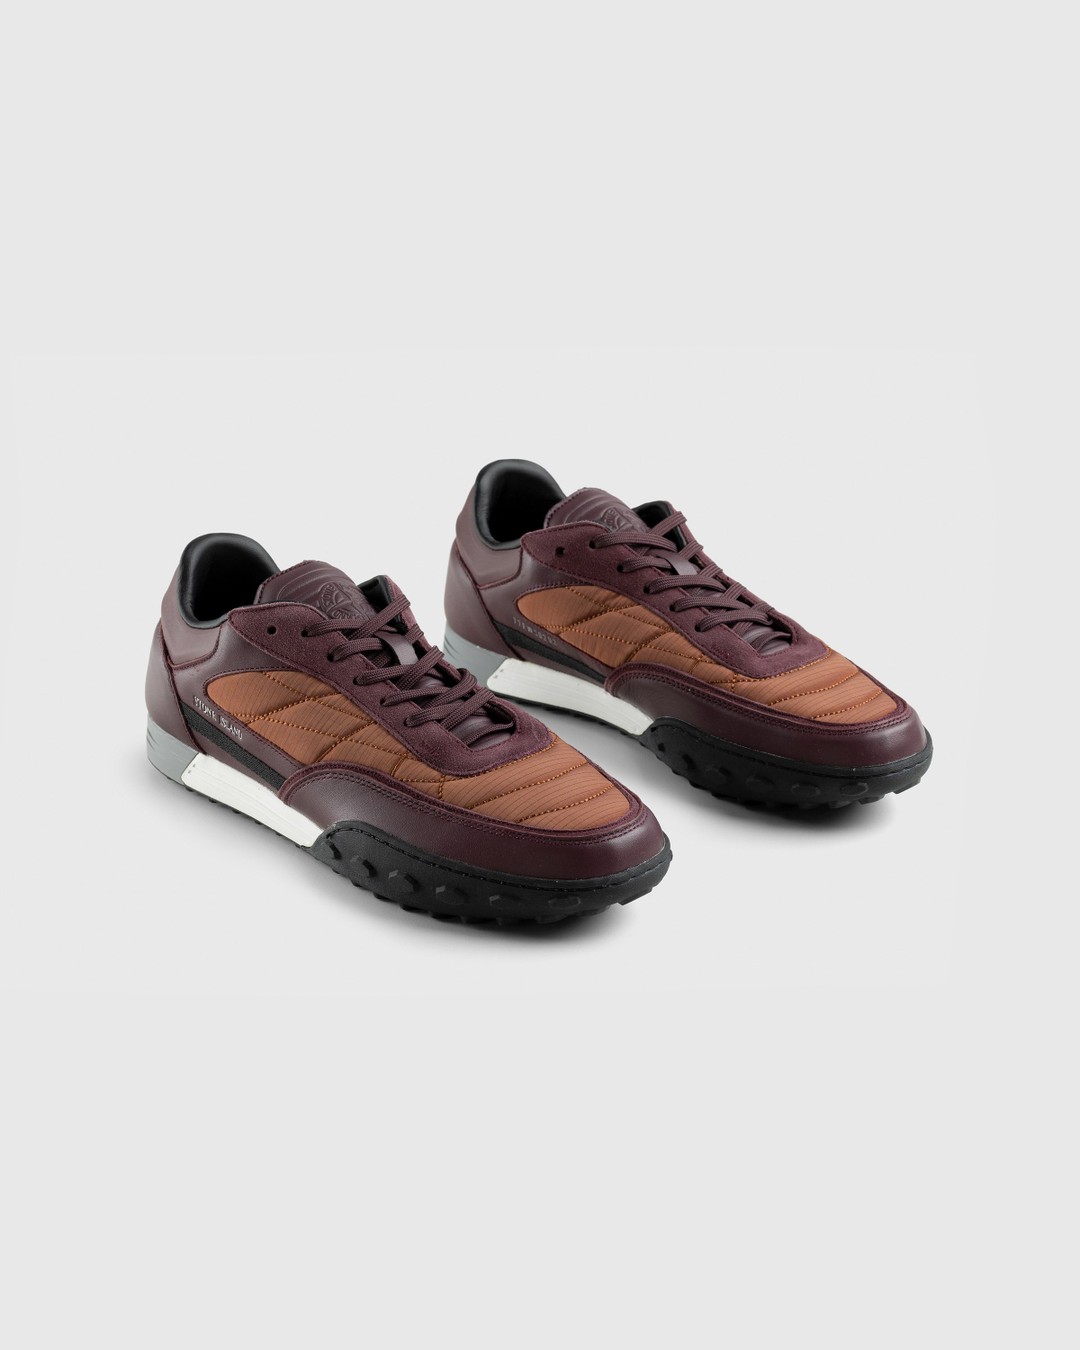 Stone Island – Football Sneaker Burgundy - Sneakers - Red - Image 3